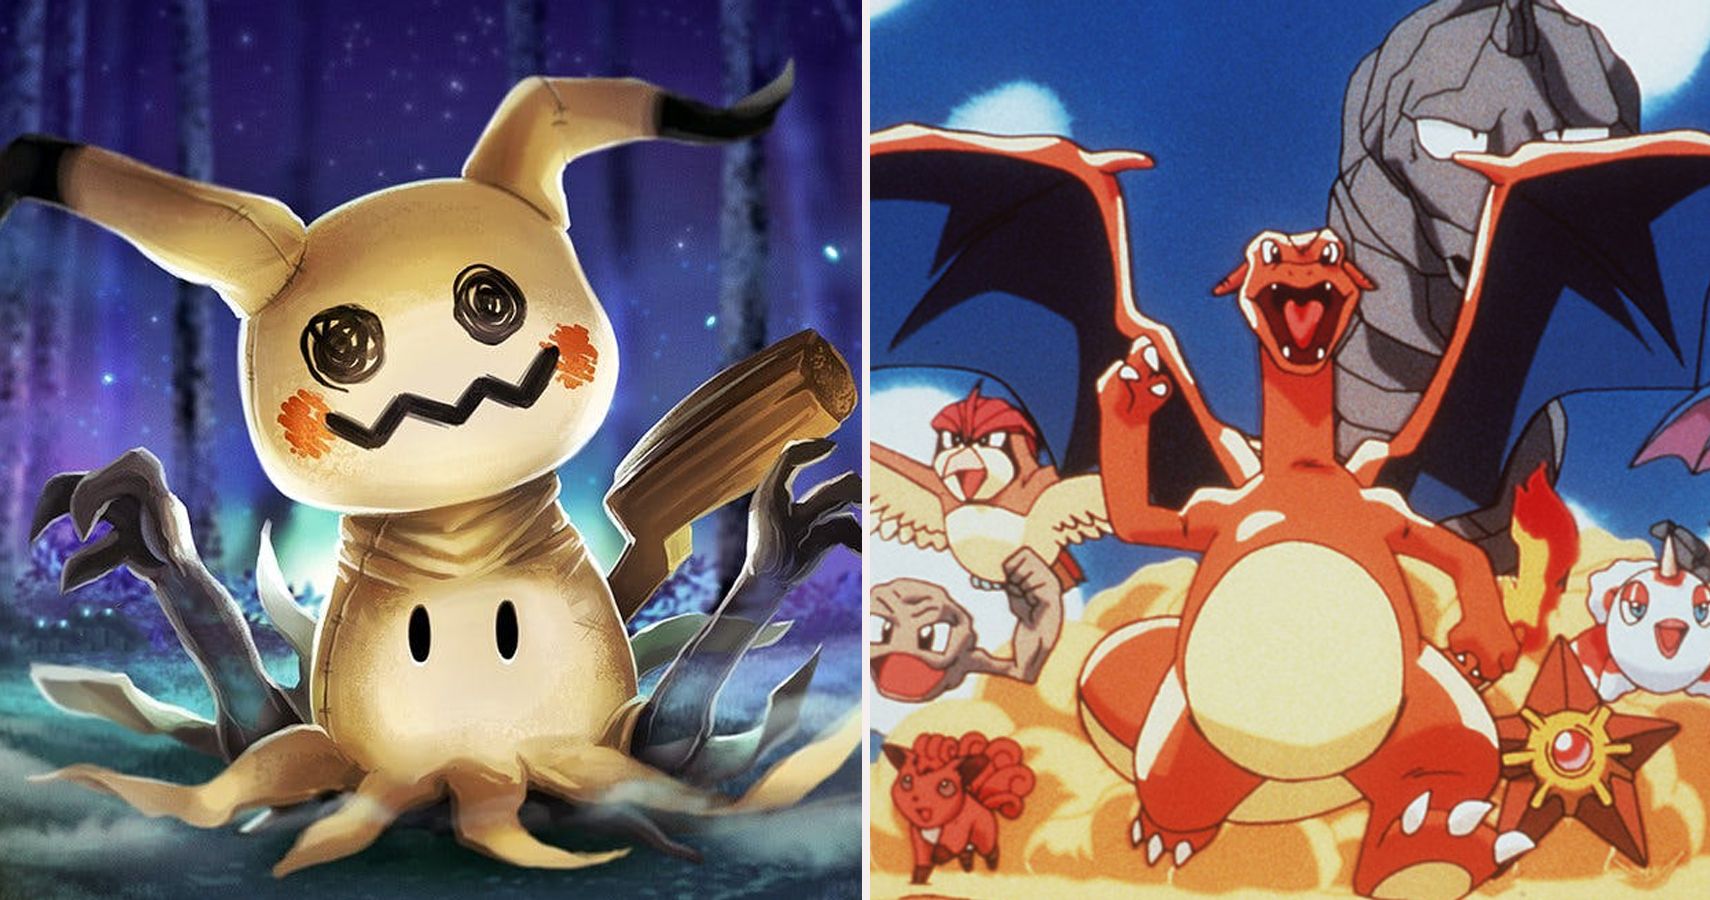 25 Powerful New Pokémon That Outclass The Originals